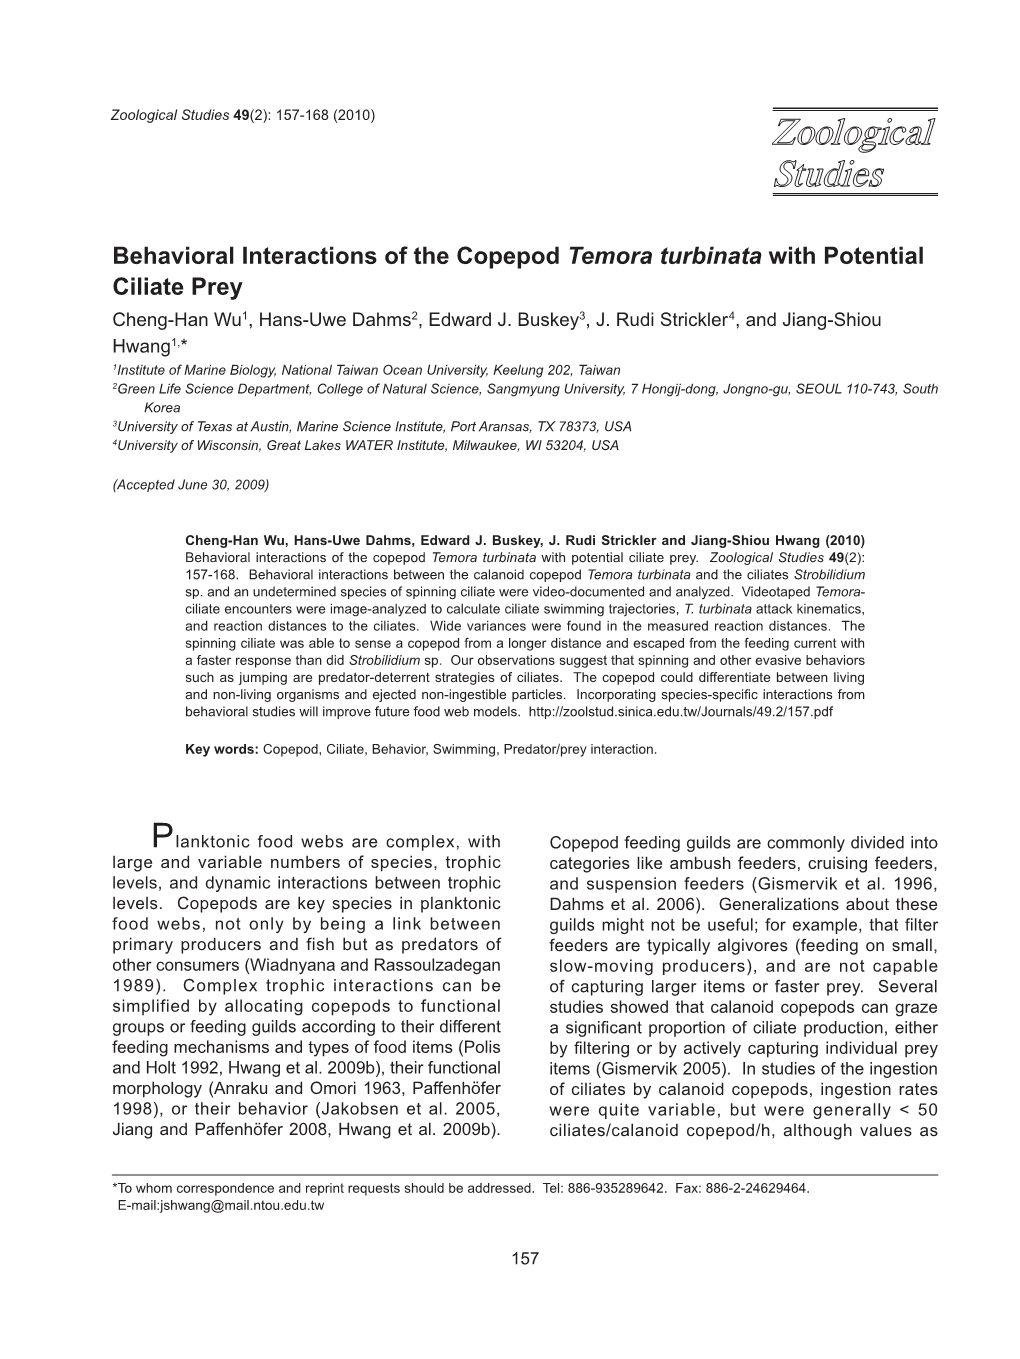 Behavioral Interactions of the Copepod Temora Turbinata with Potential Ciliate Prey Cheng-Han Wu1, Hans-Uwe Dahms2, Edward J